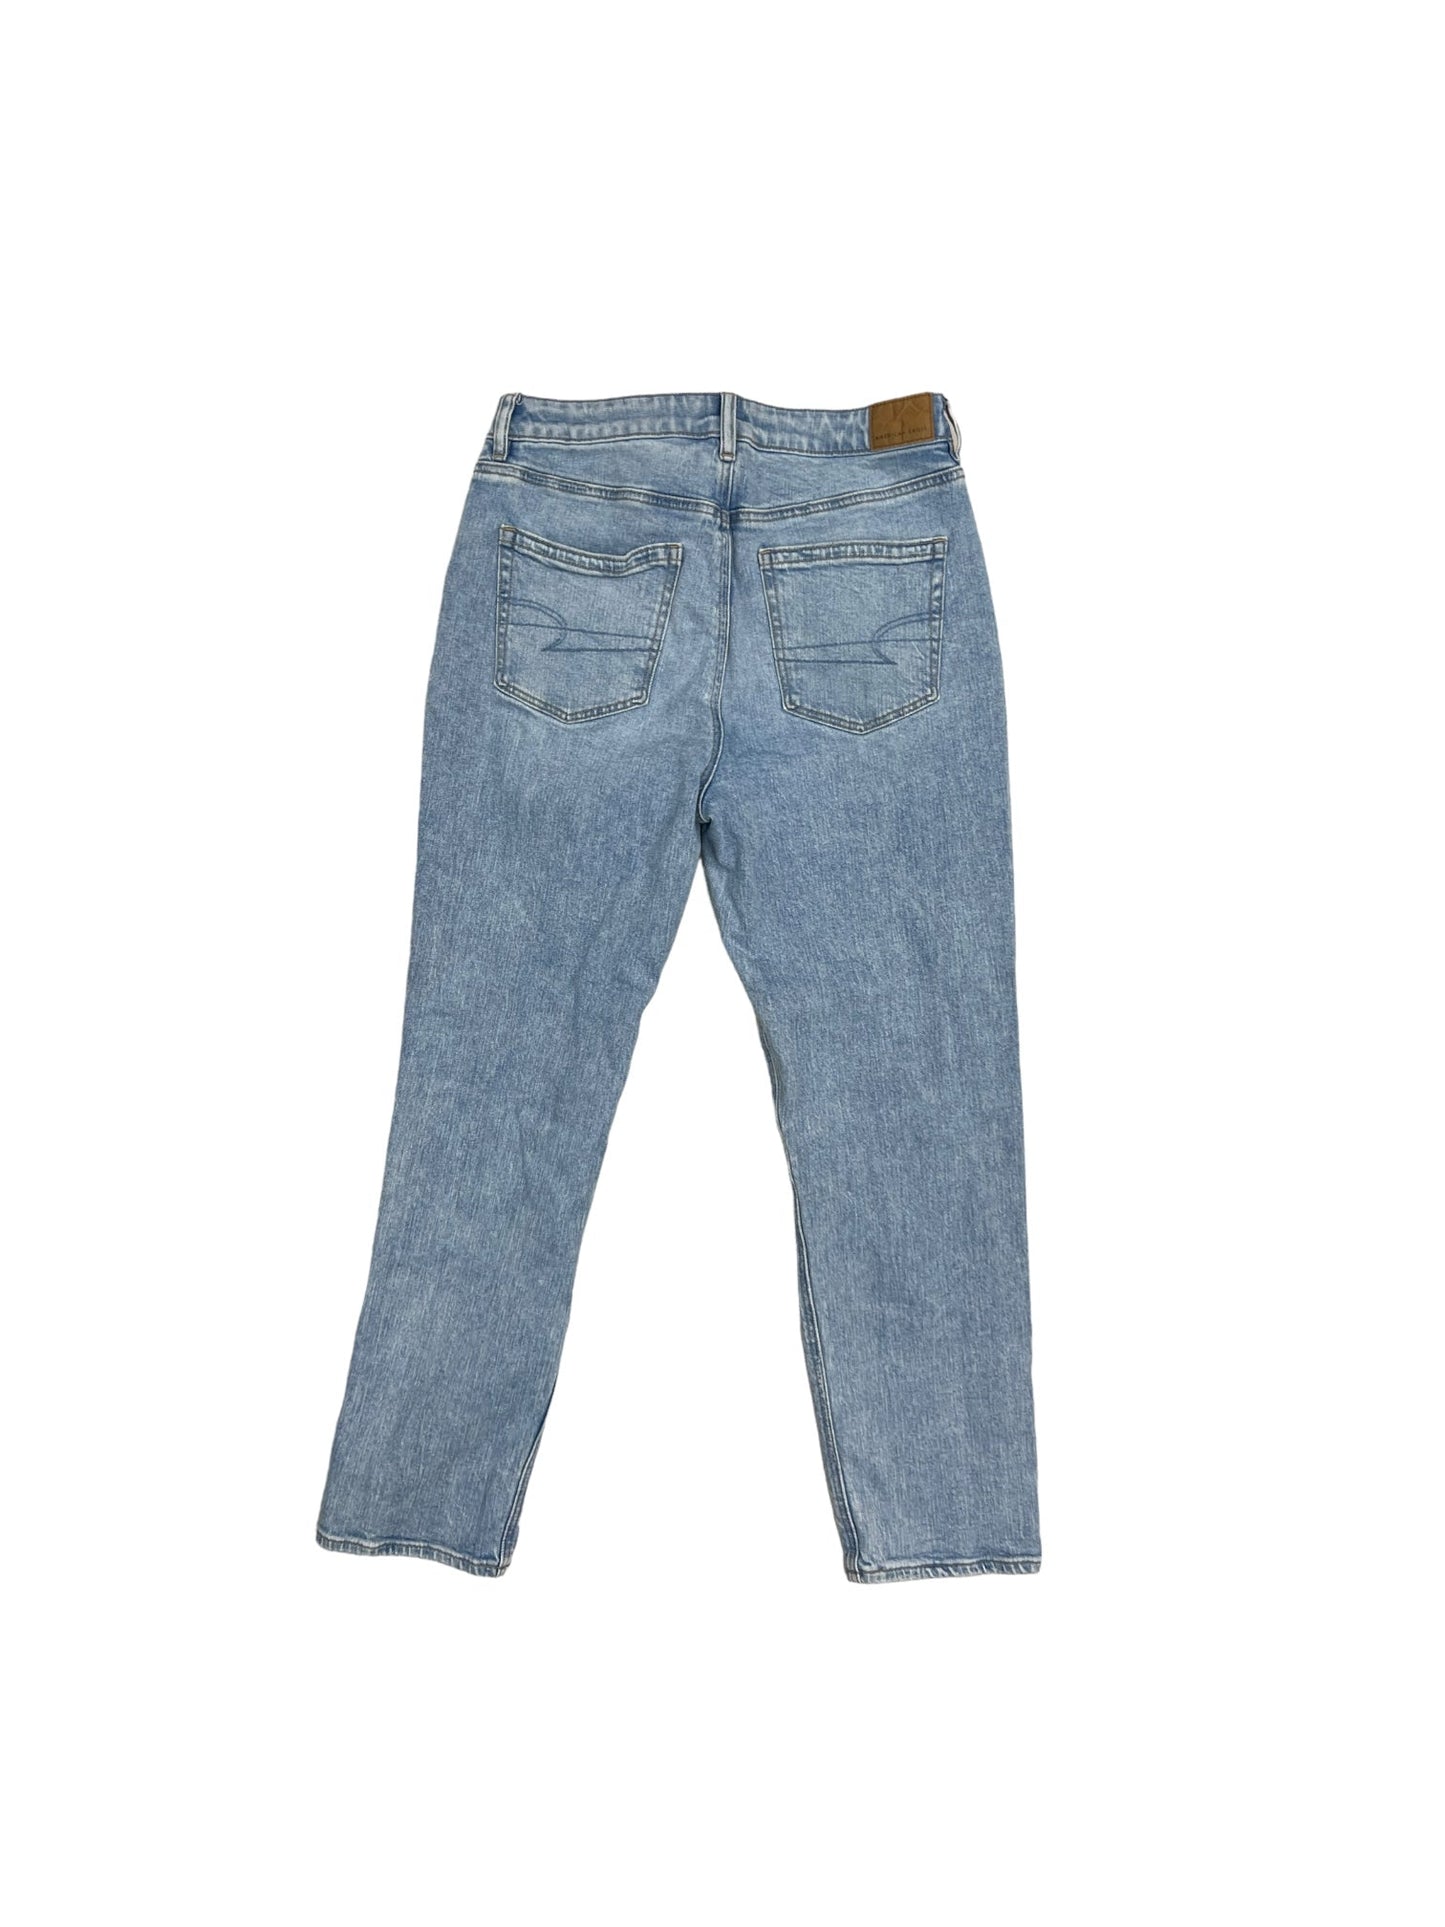 Blue Denim Jeans Boyfriend American Eagle, Size 8